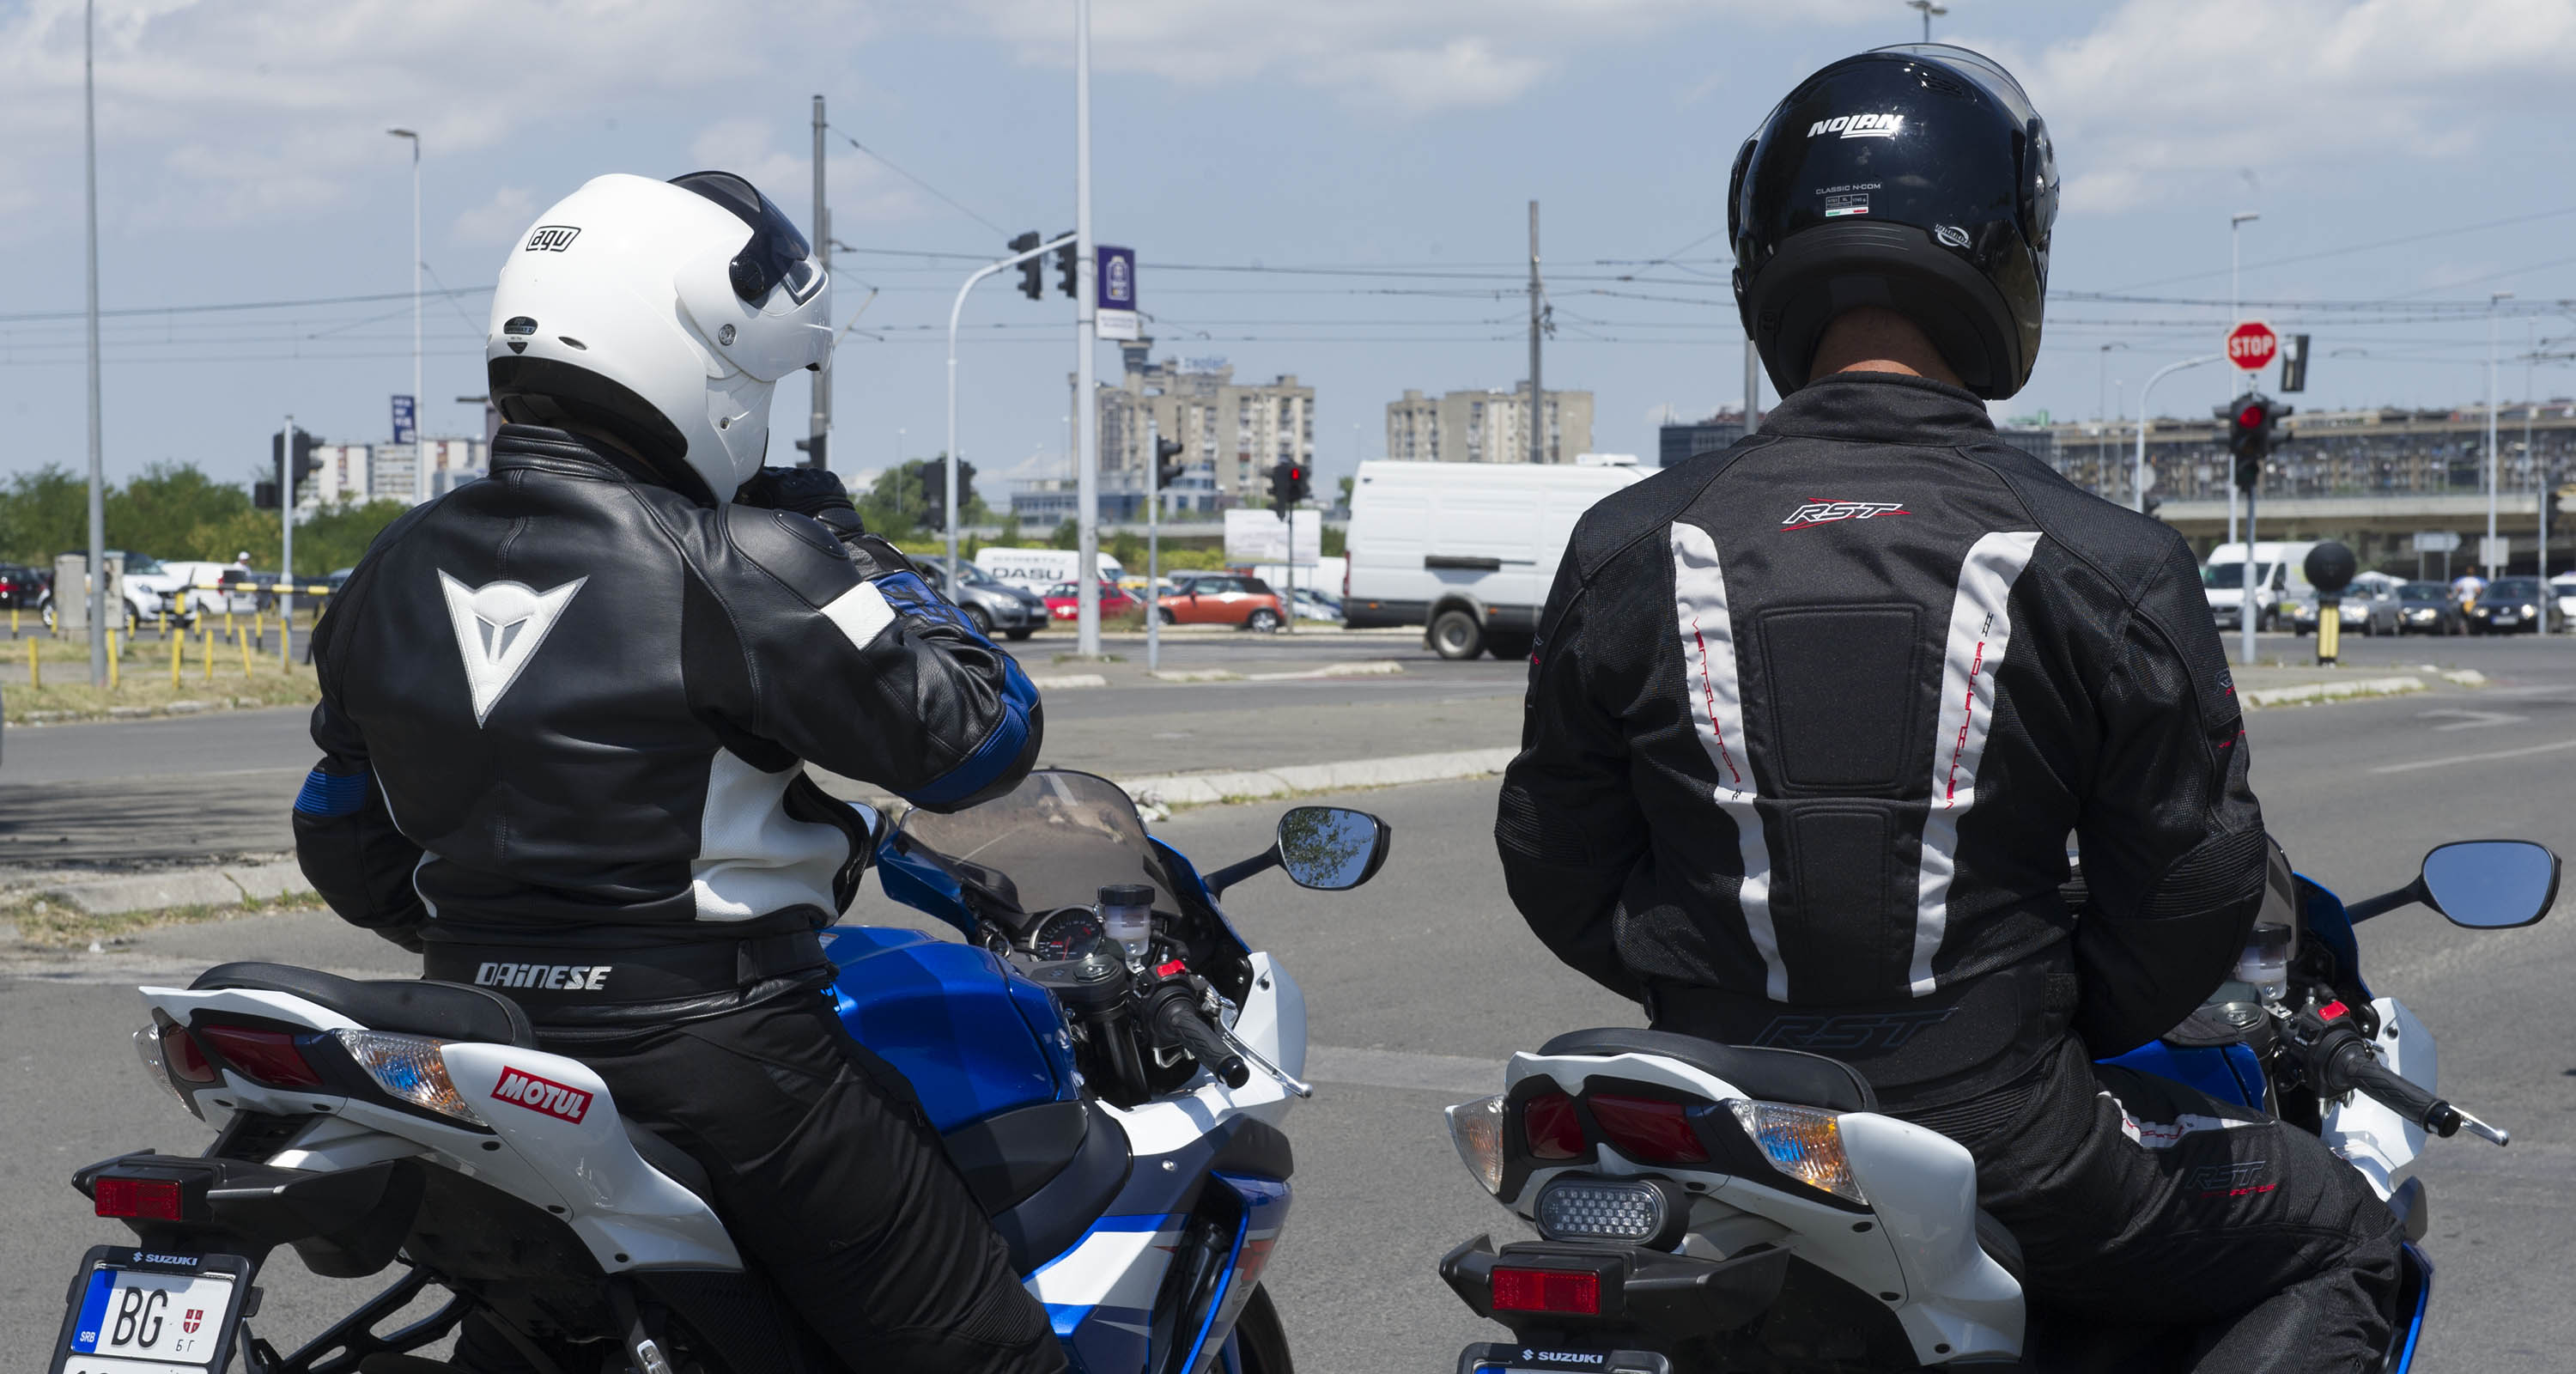 Појачанa контролa возача мотоцикала и мопеда